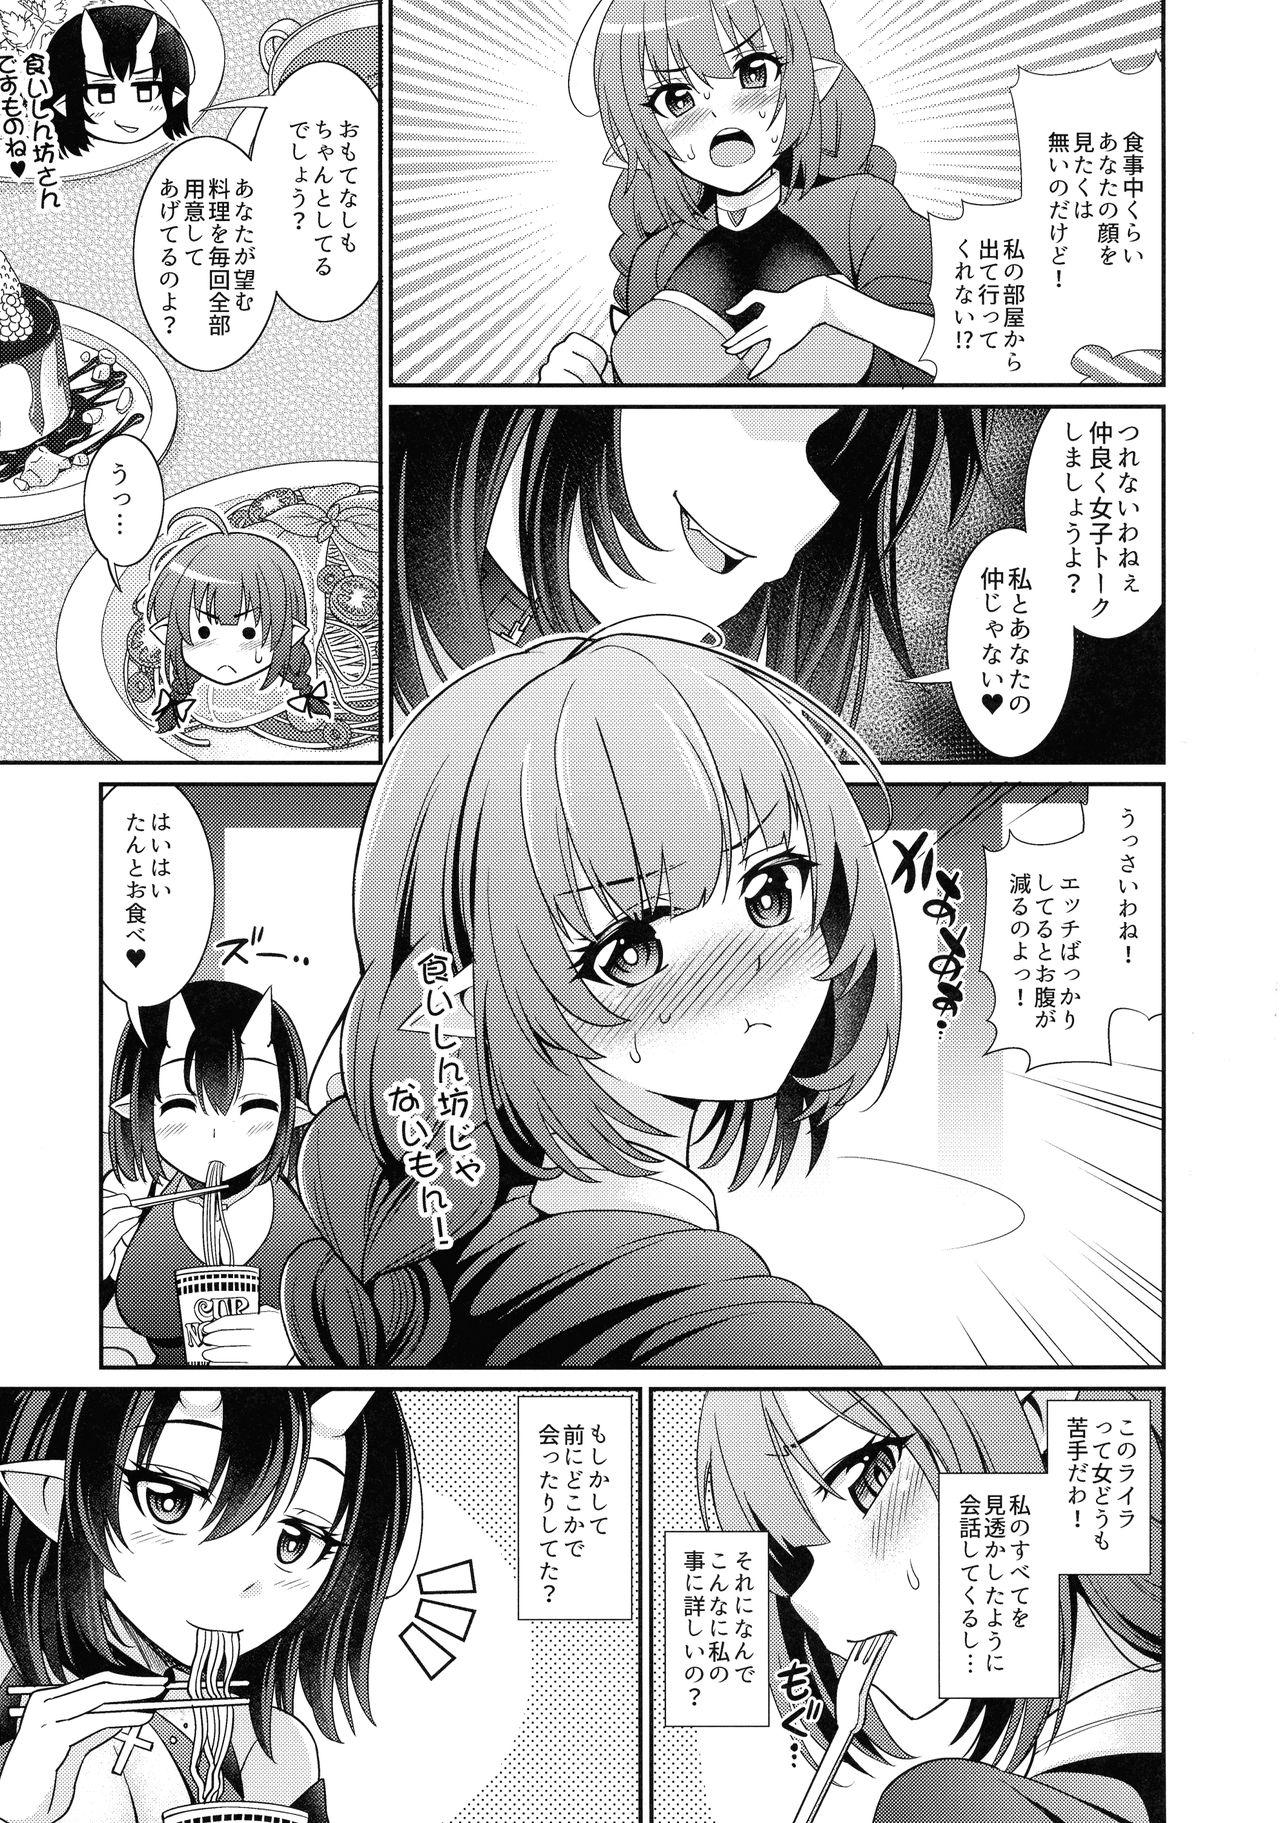 Phat Ass Futanari Elf no Tanetsuke Bokujou 2 - Original Scene - Page 6